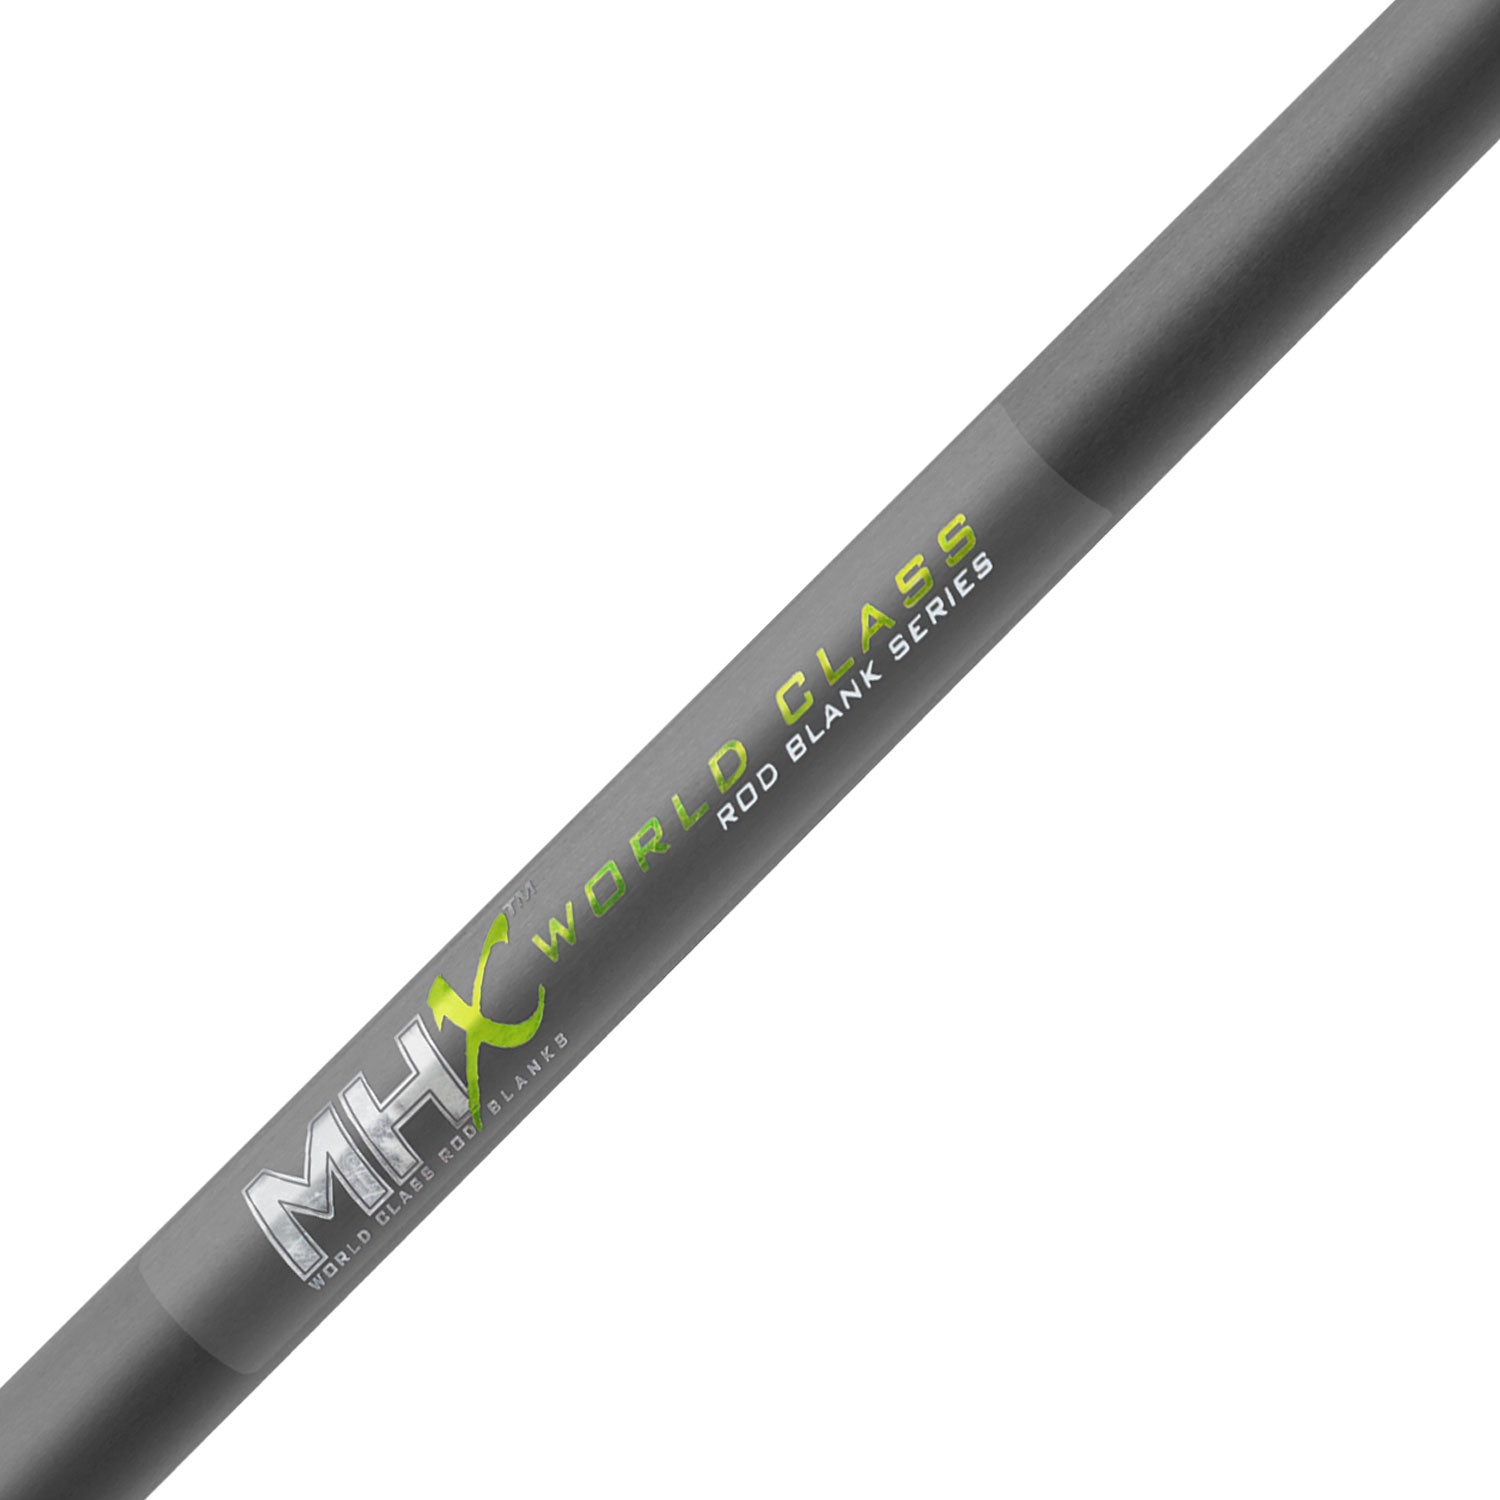 MHX 7'0" Med-Heavy Popping Rod Blank - P844